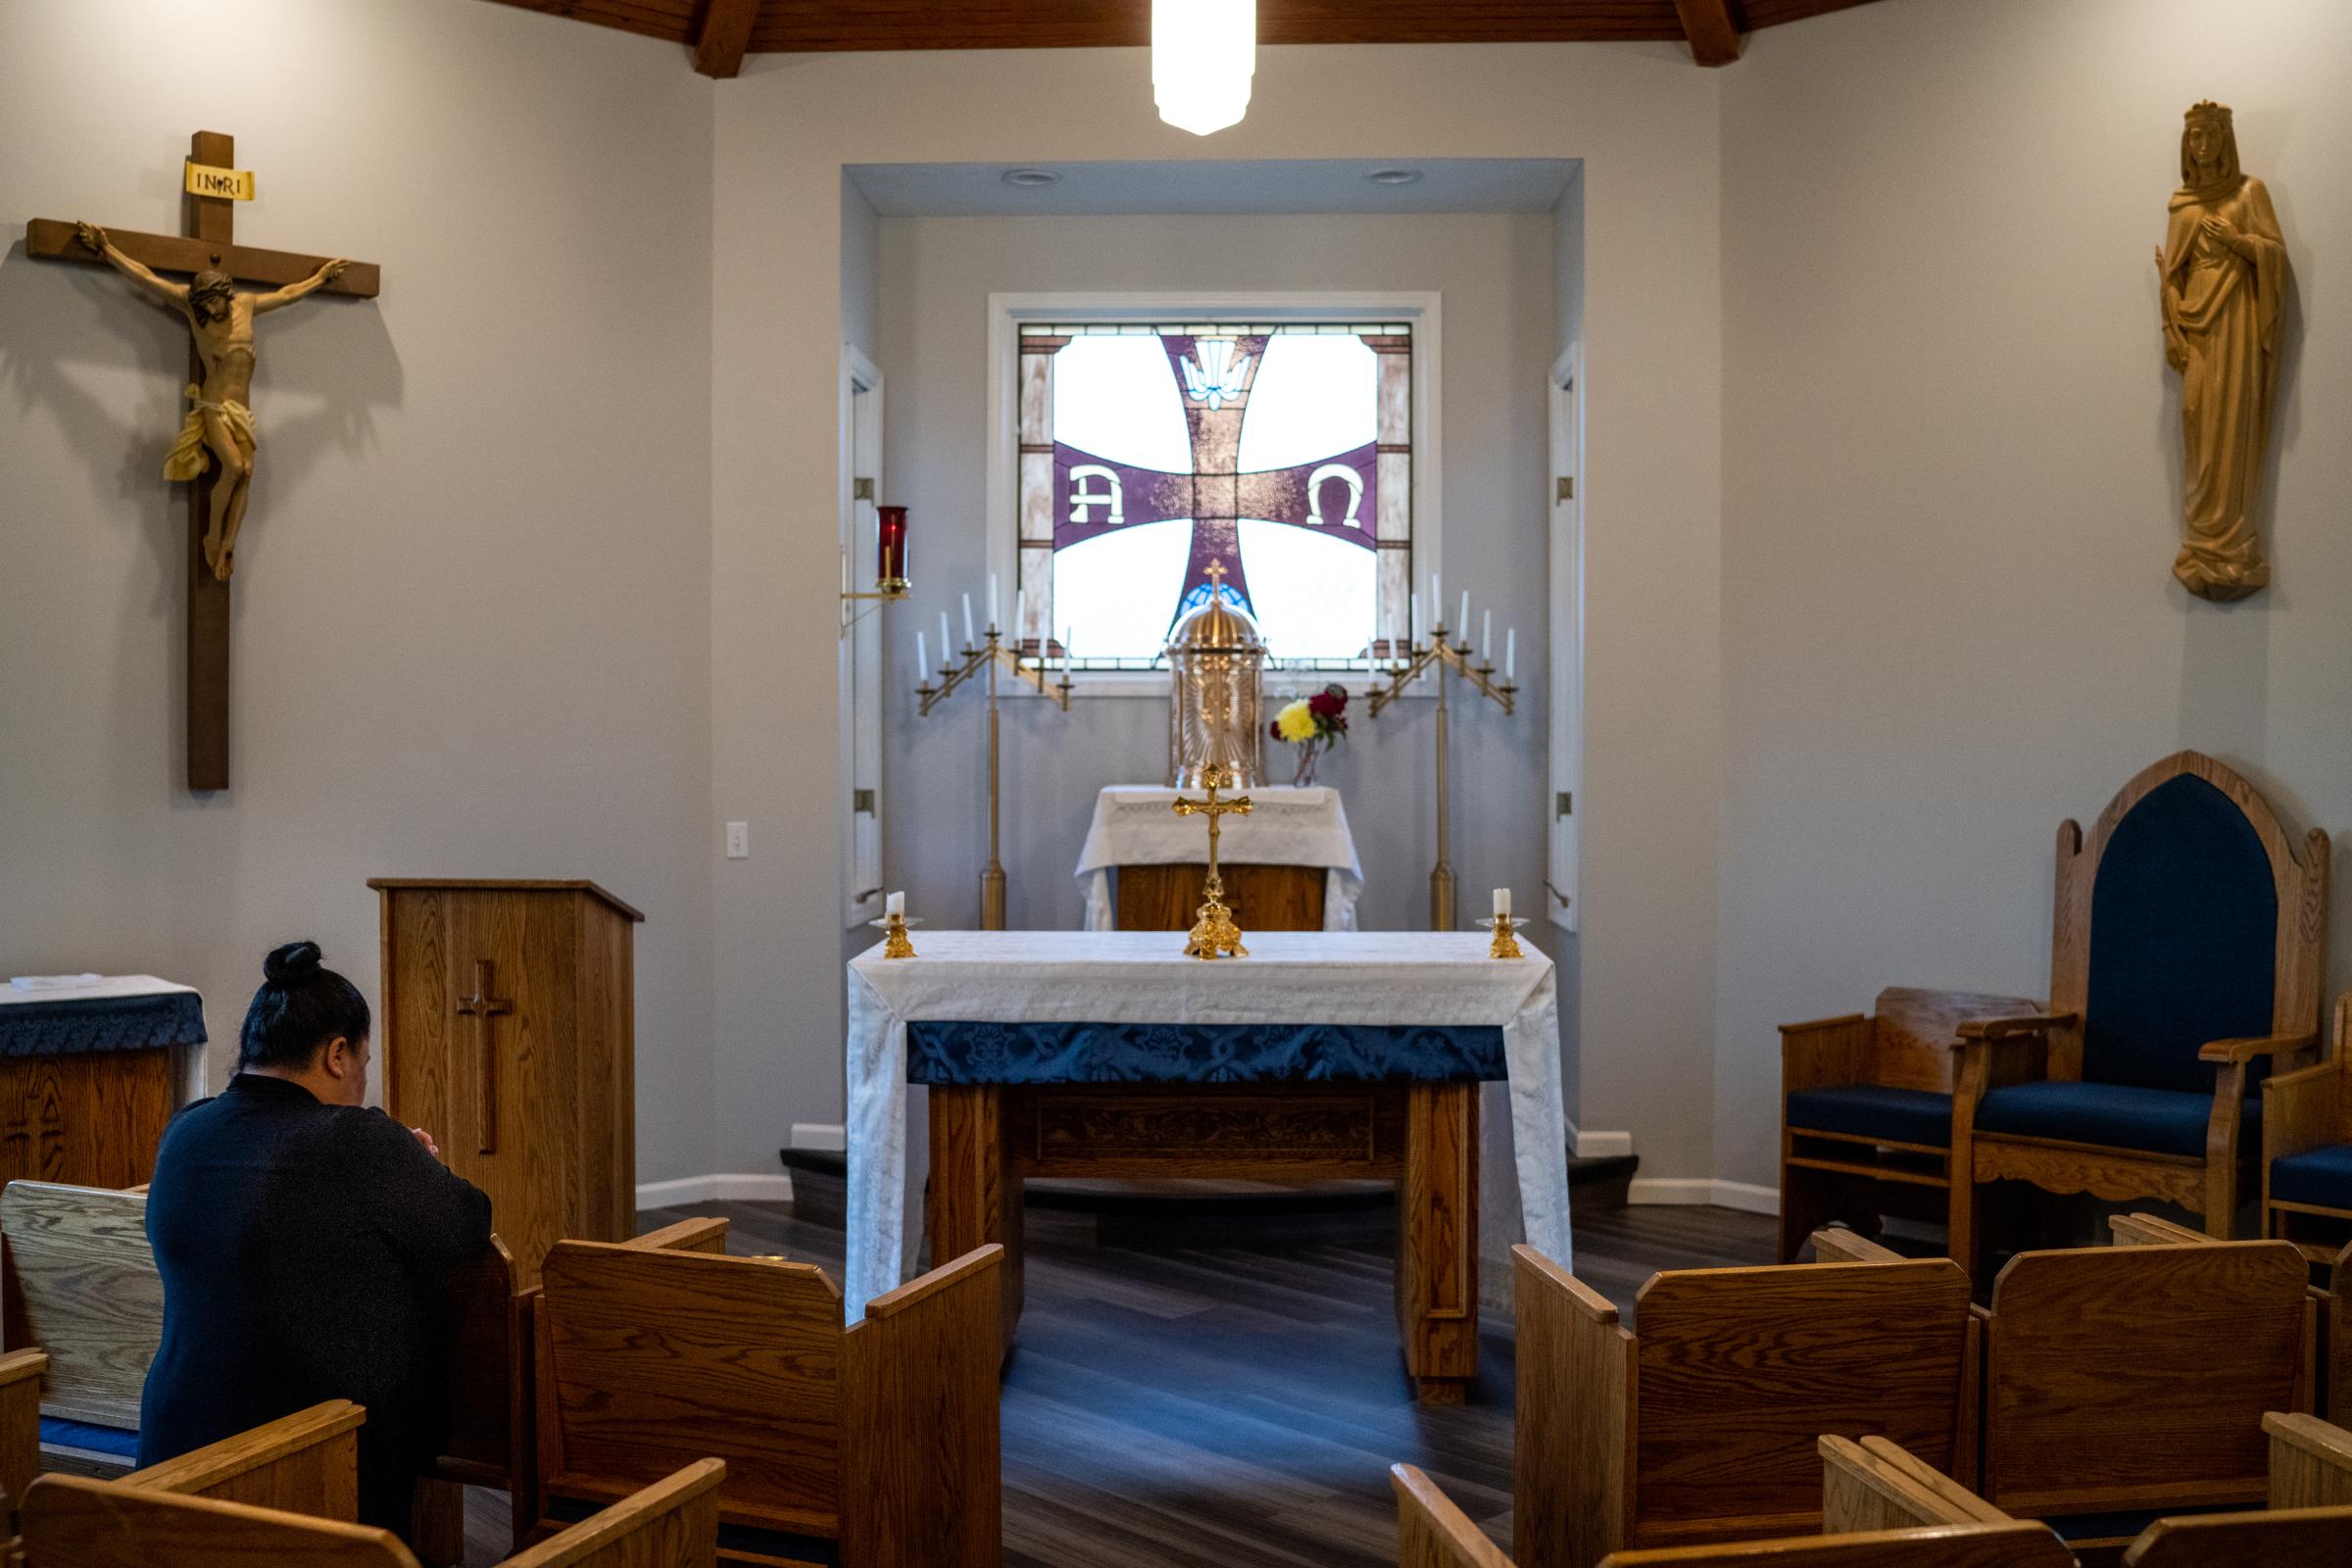 A House Full of Blessings - Sr. Anita prays alone inside the St. Mary’s Home...